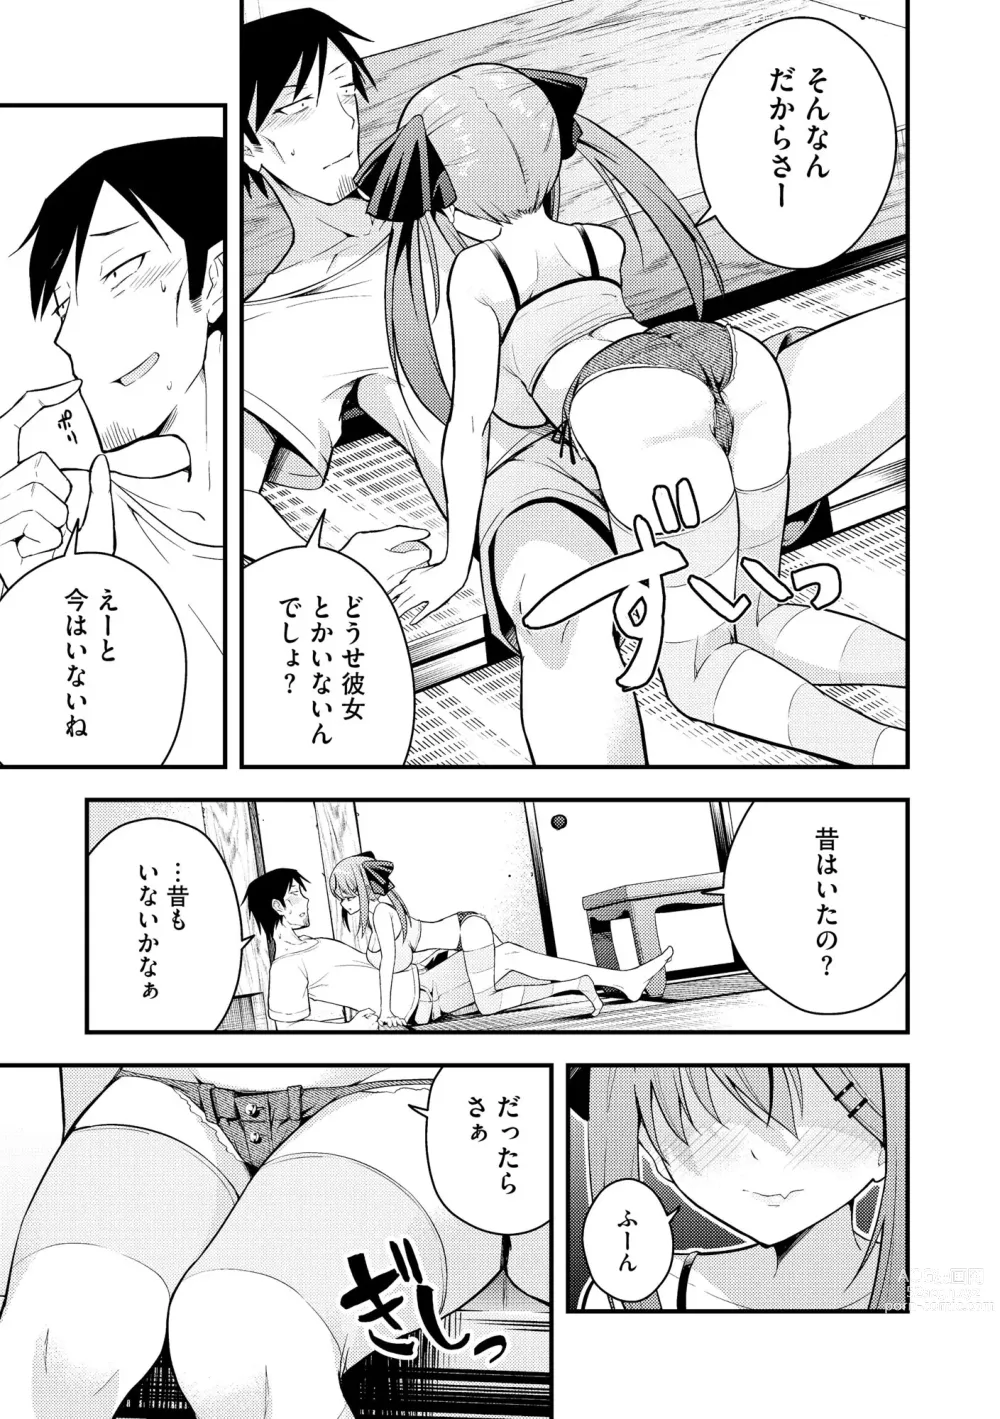 Page 11 of manga Cyberia Plus Vol. 16